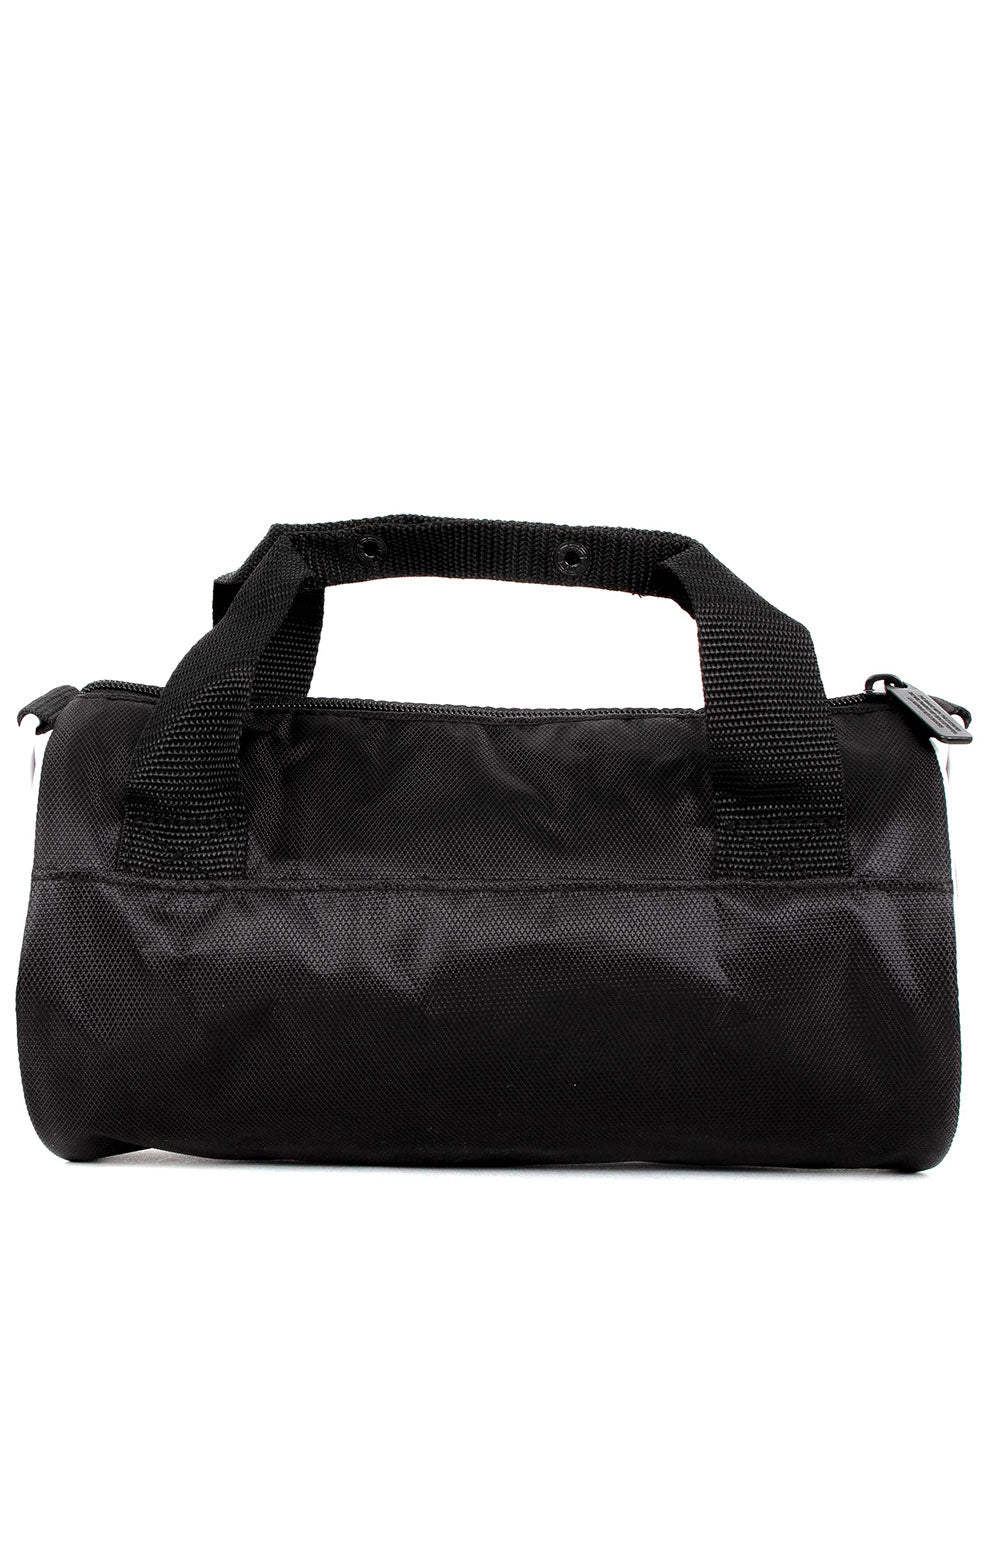 Santiago Mini Duffel Bag - Black/White